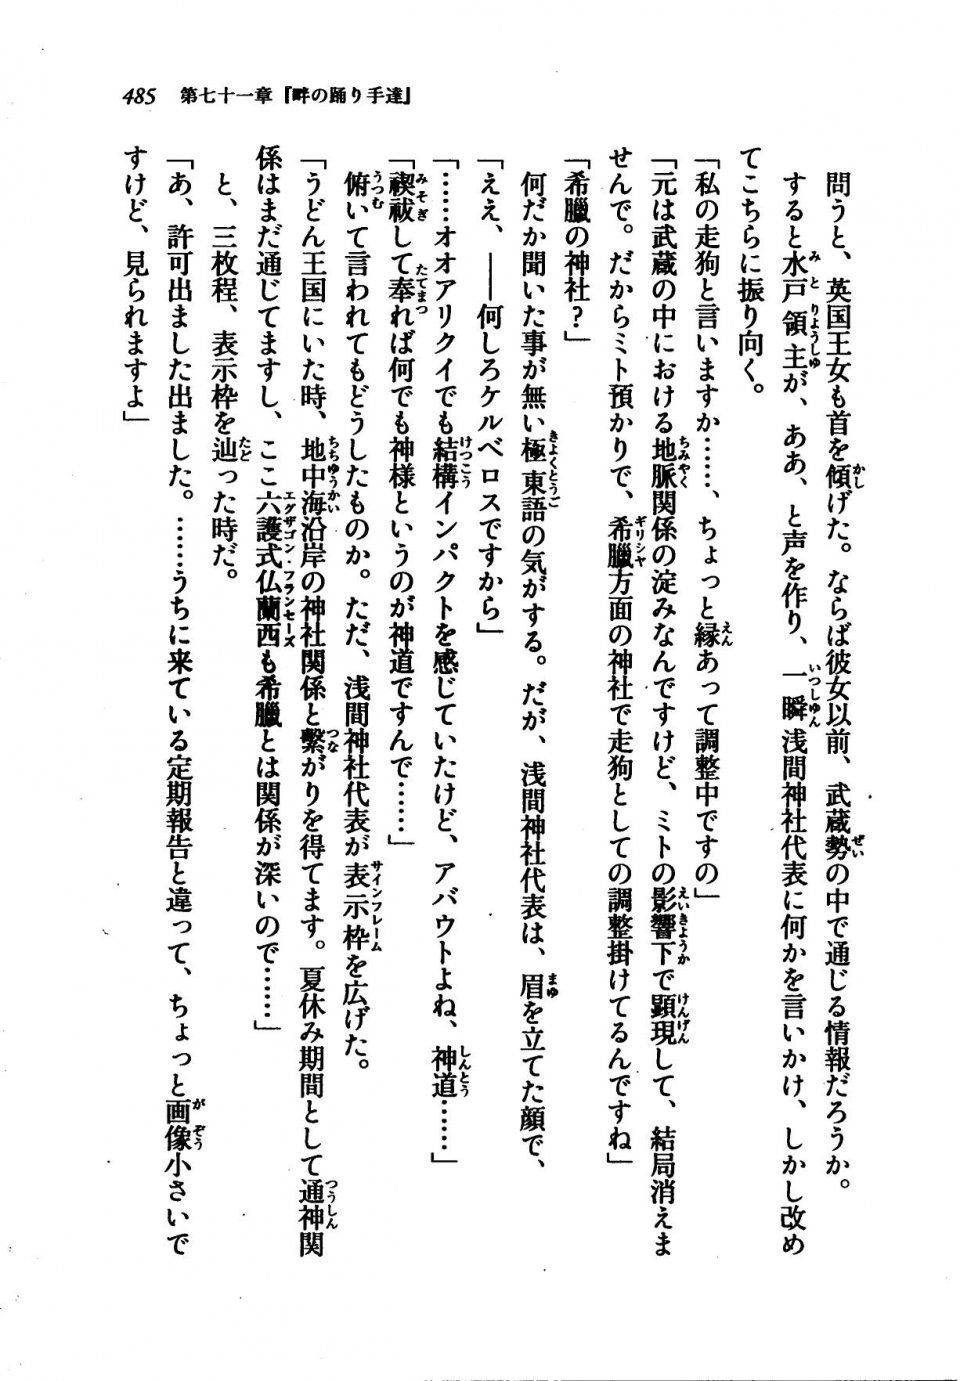 Kyoukai Senjou no Horizon LN Vol 21(8C) Part 1 - Photo #484